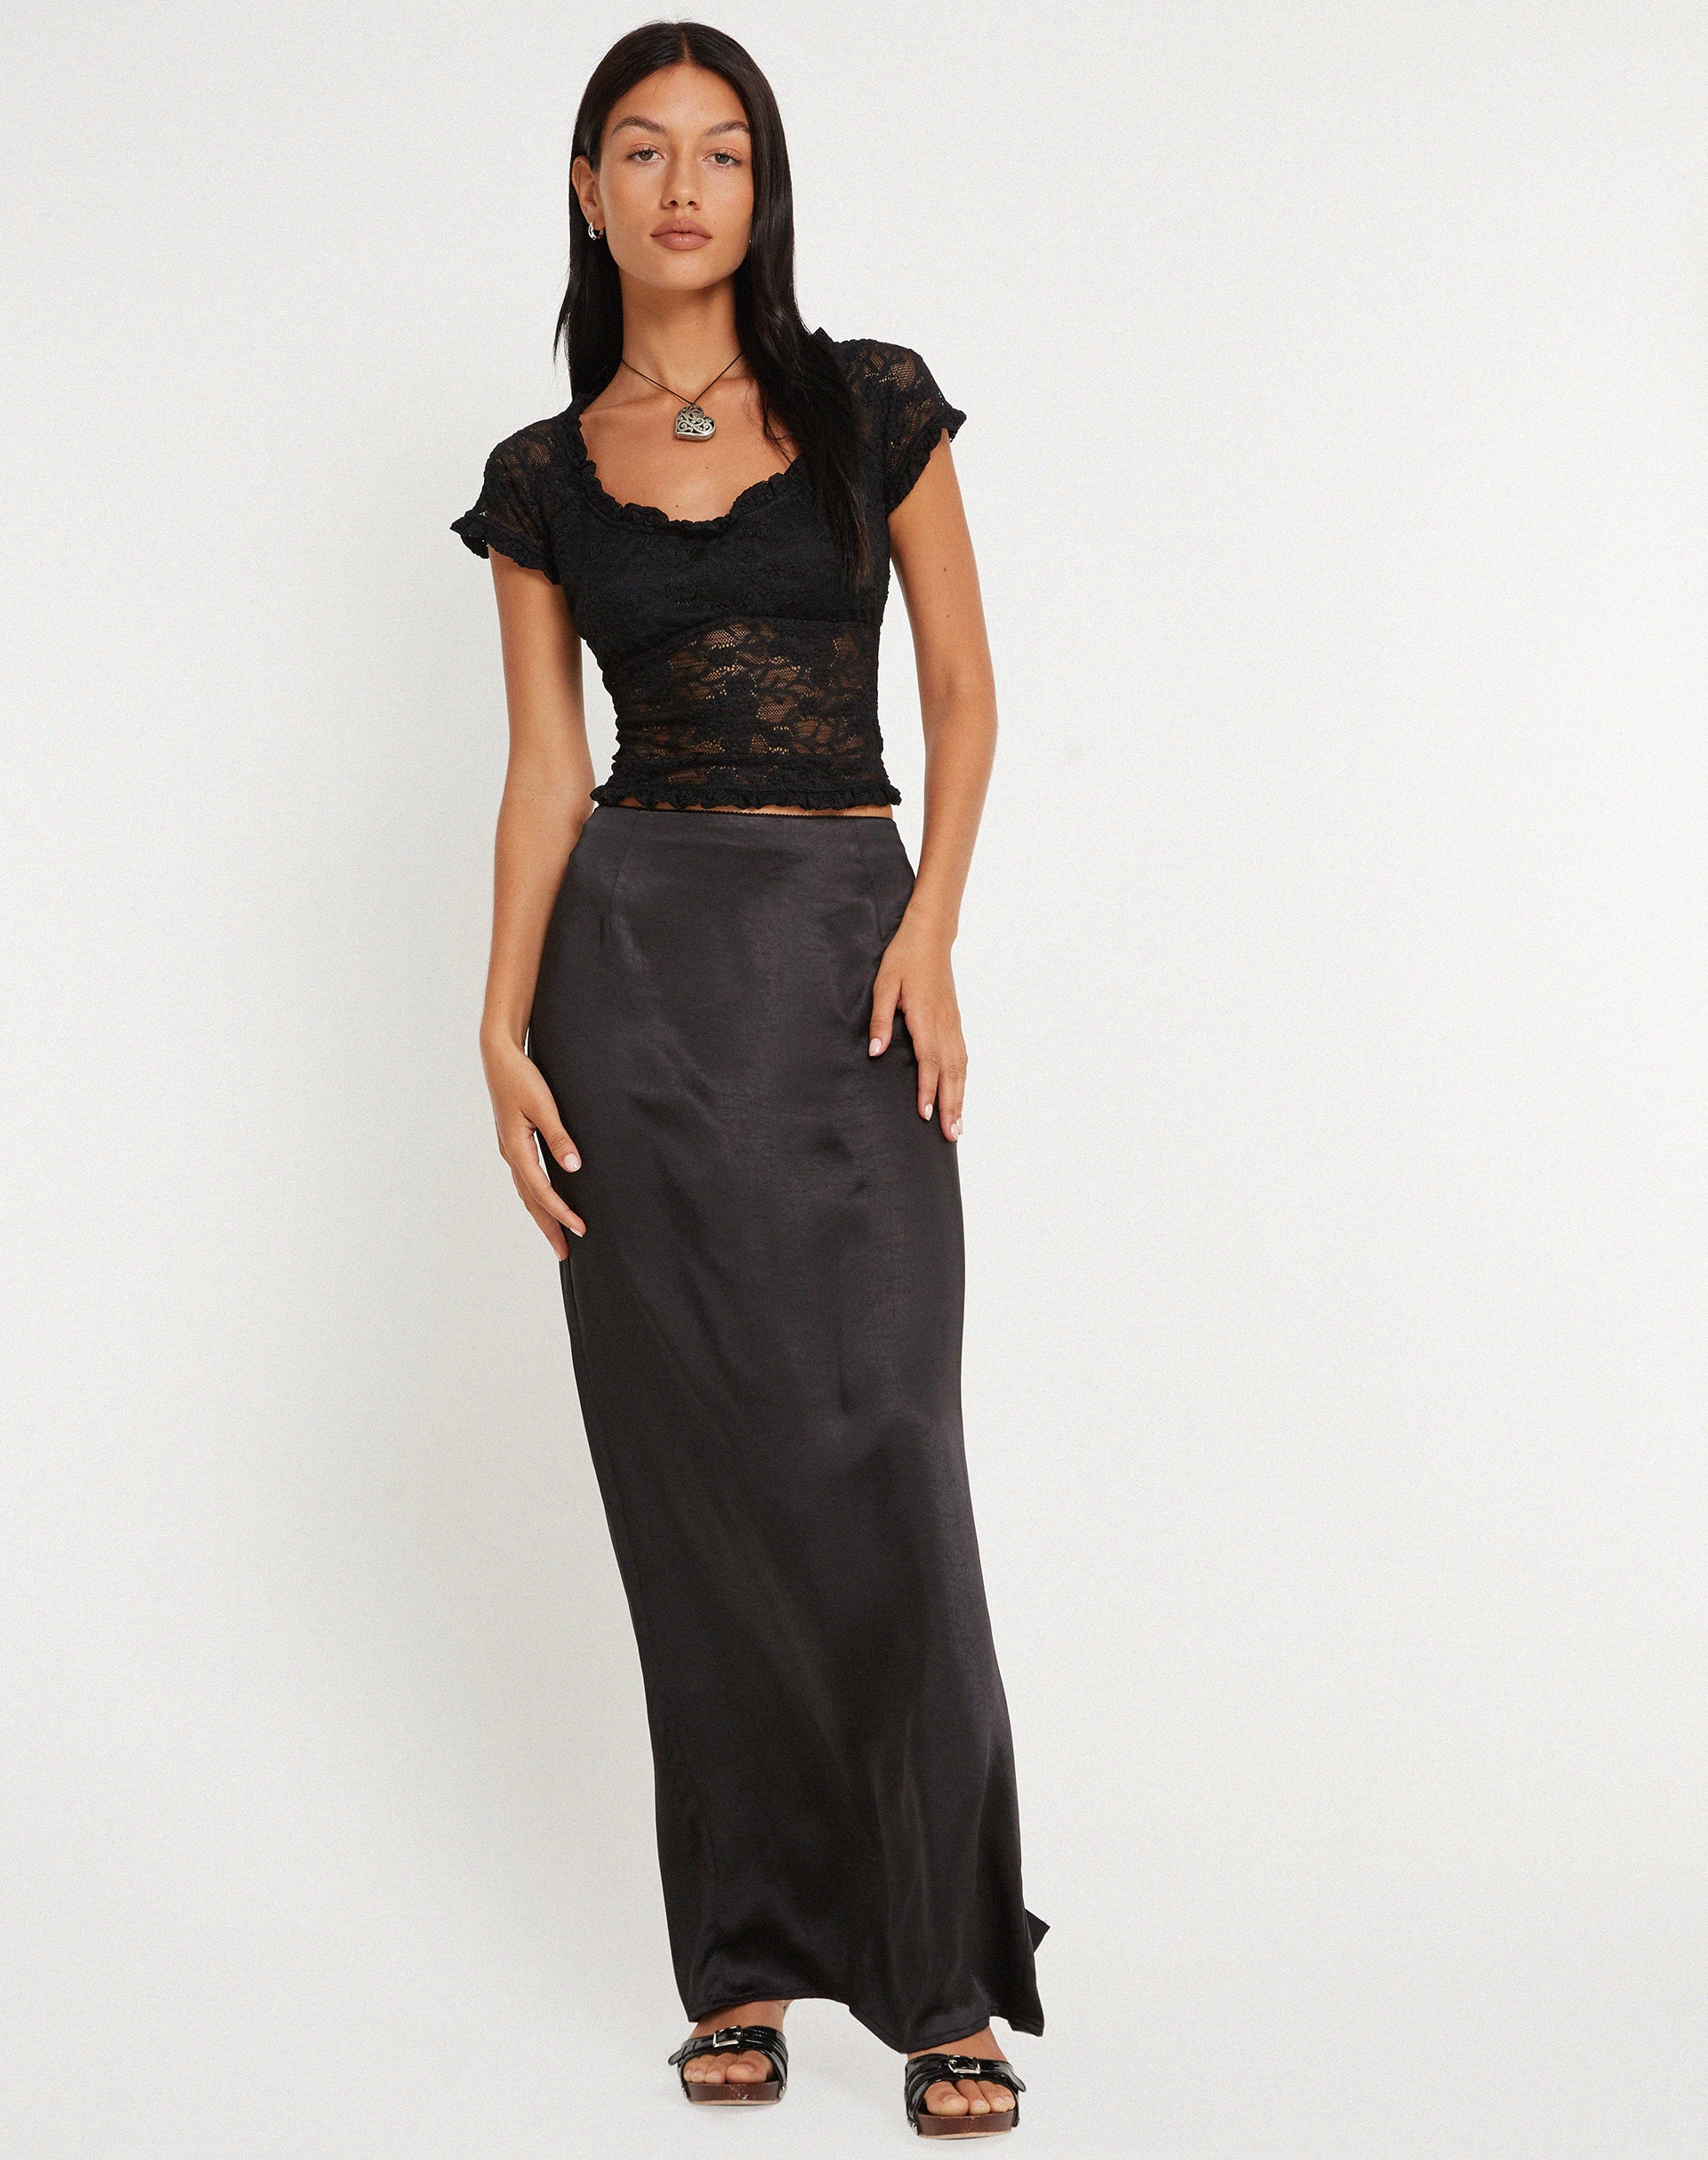 Black Short Sleeve Scoop Neckline Lace Detailing Top | Rufte ...